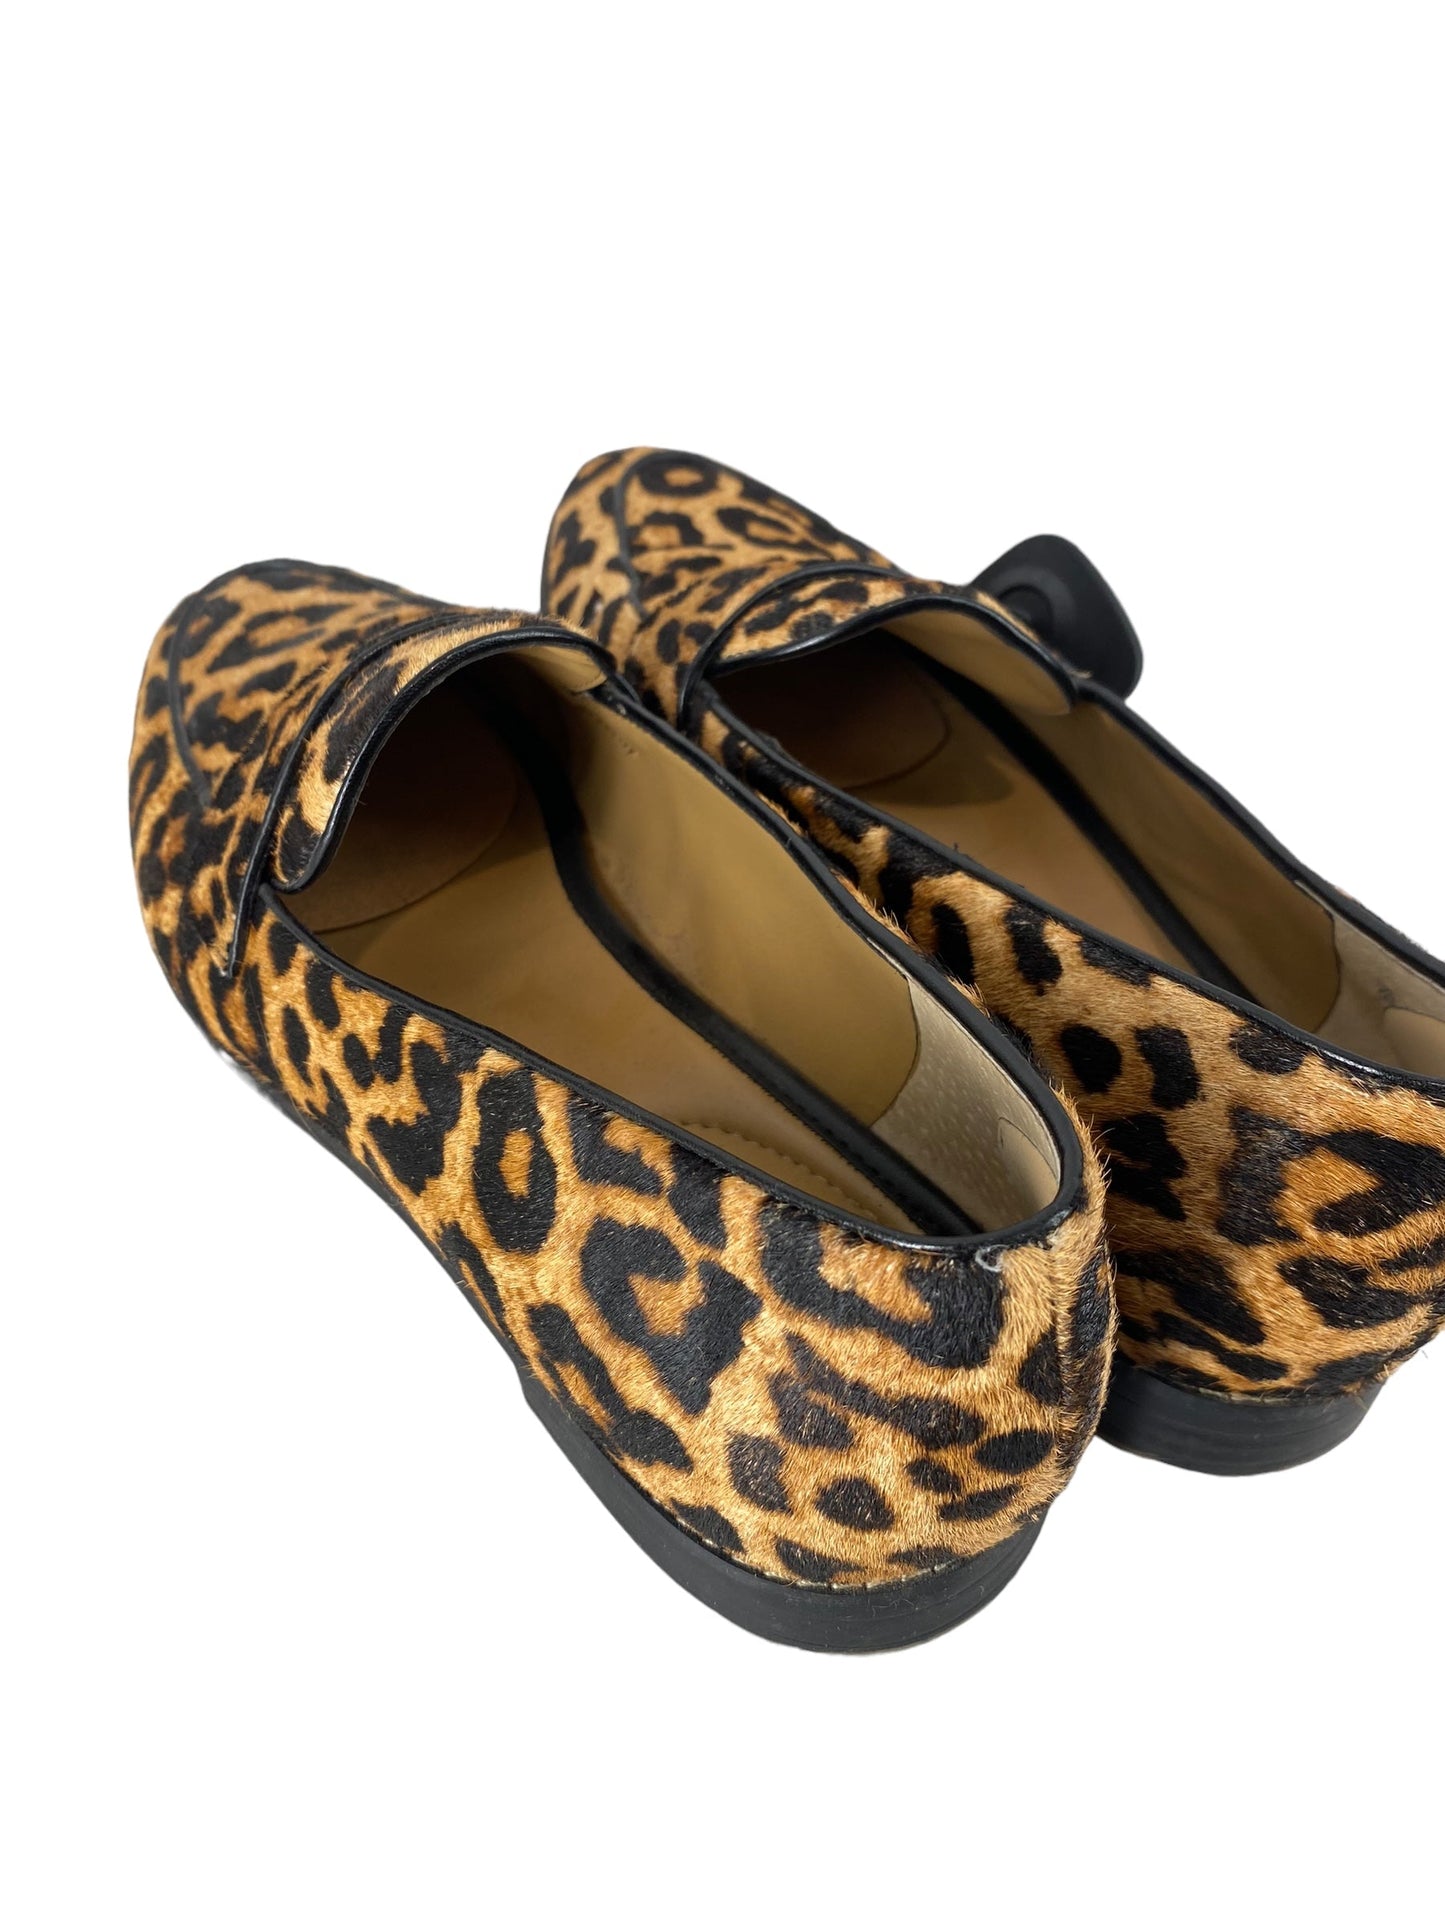 Animal Print Shoes Flats Franco Sarto, Size 11